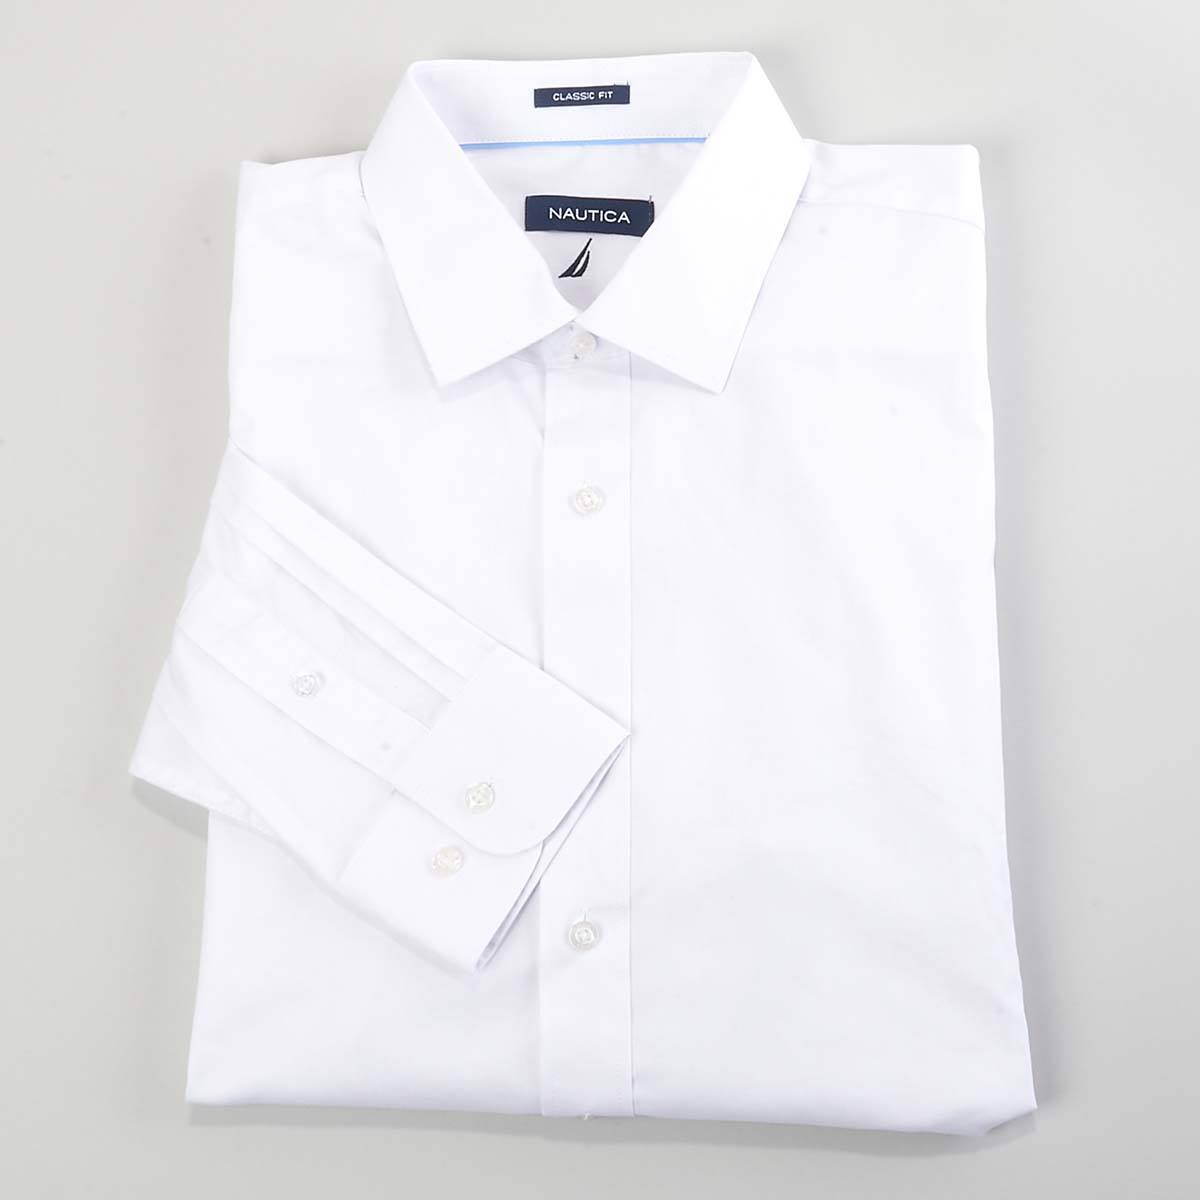 Mens Nautica Traveler Classic Fit Dress Shirt - White